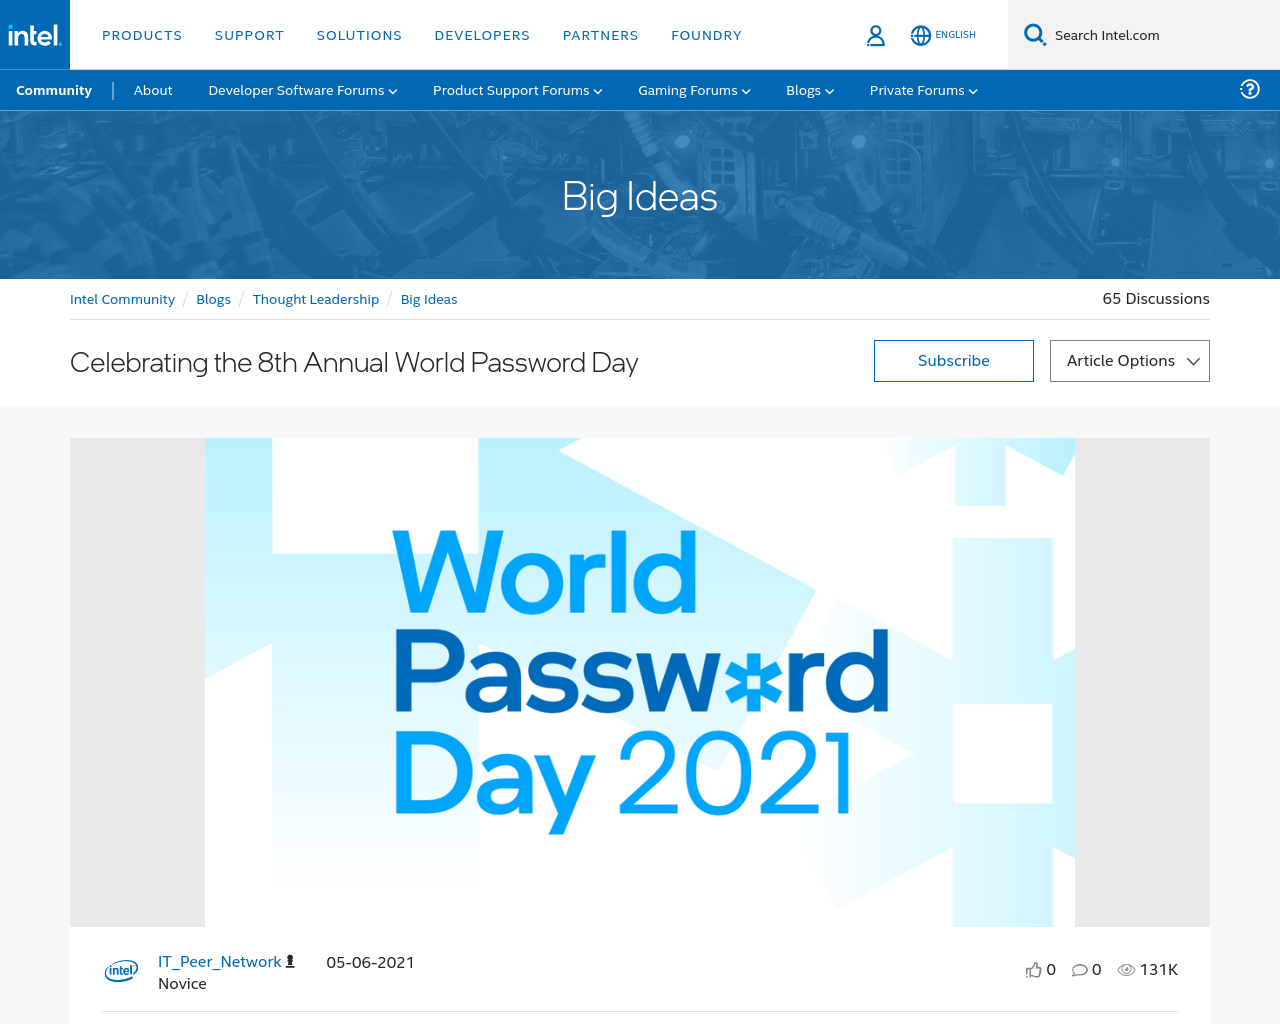 passwordday.org